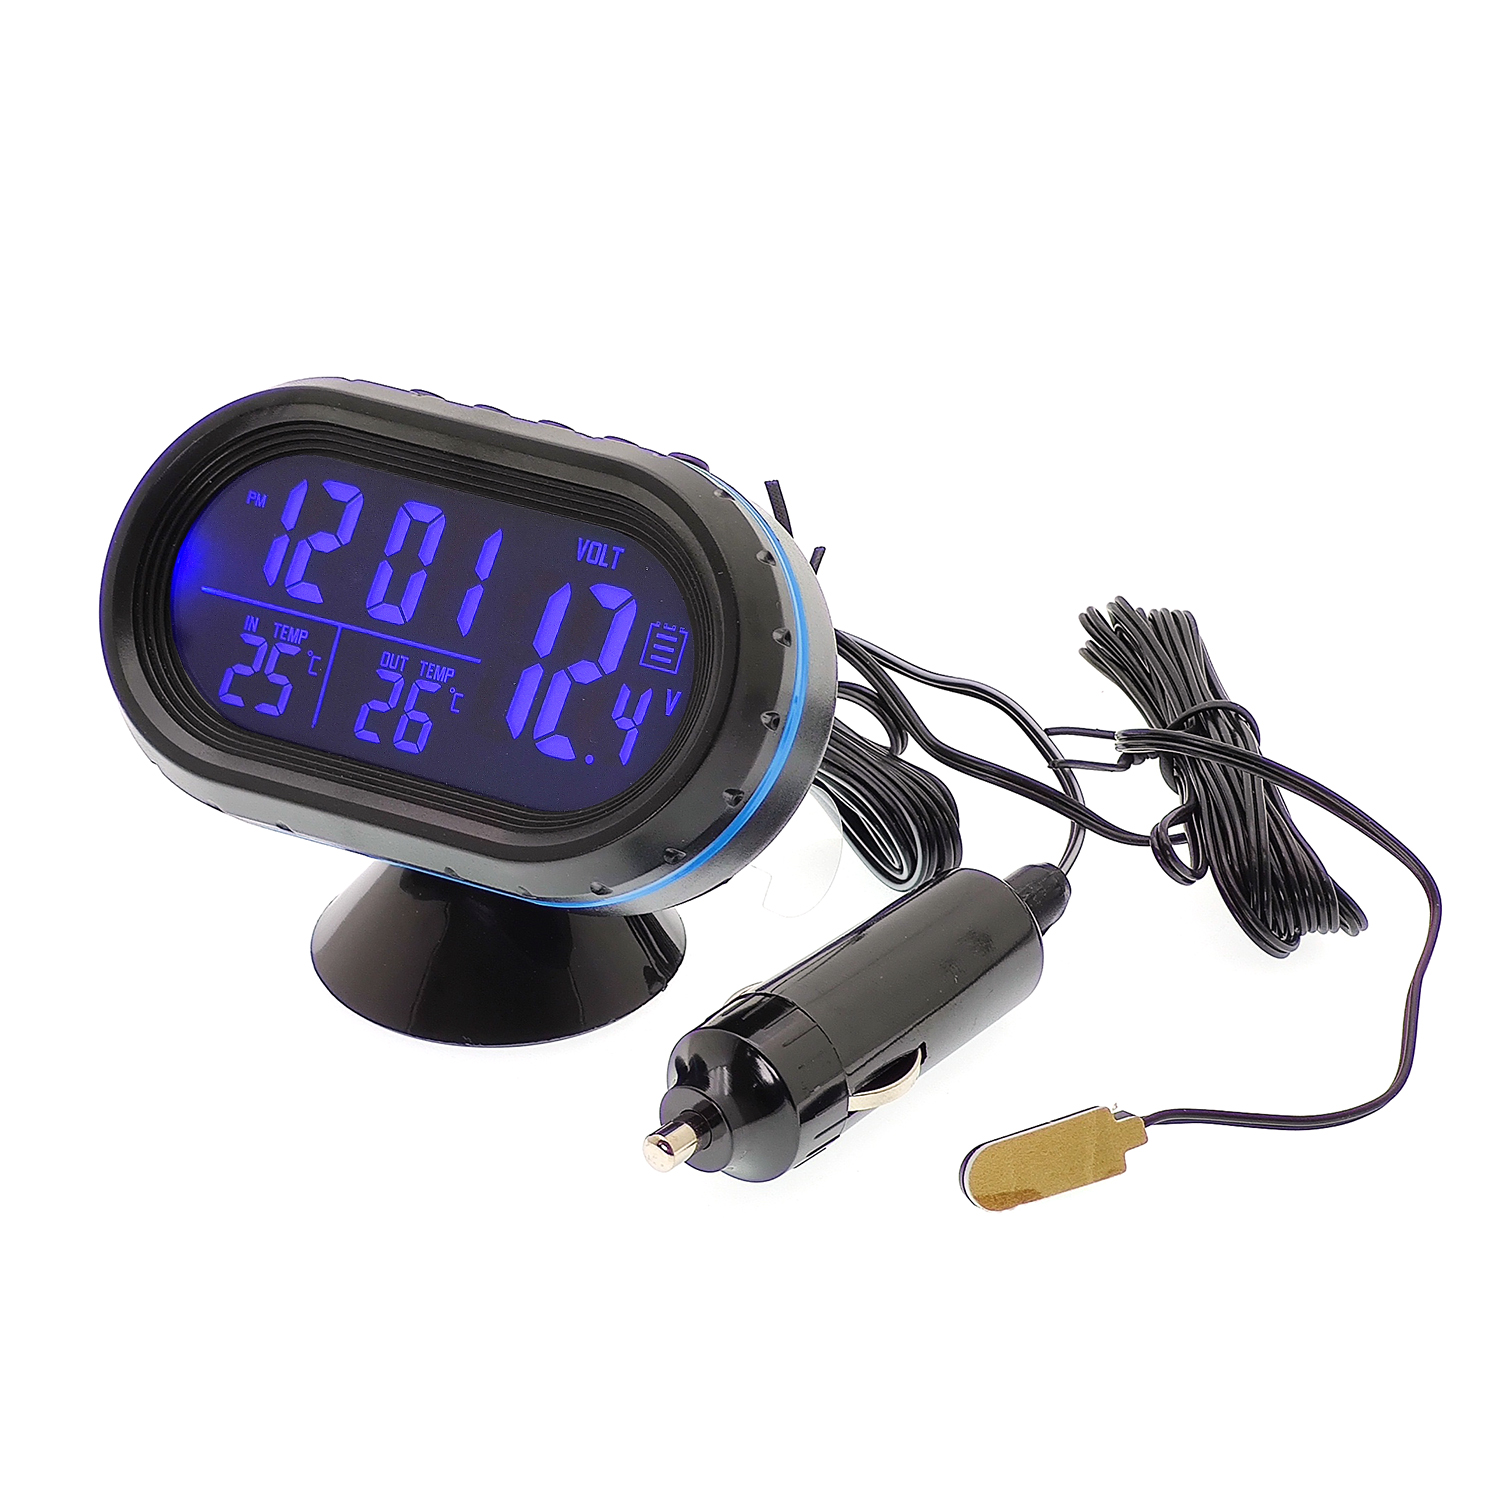 Часы эл. авто VST7009V (температура, будильник, вольтметр)